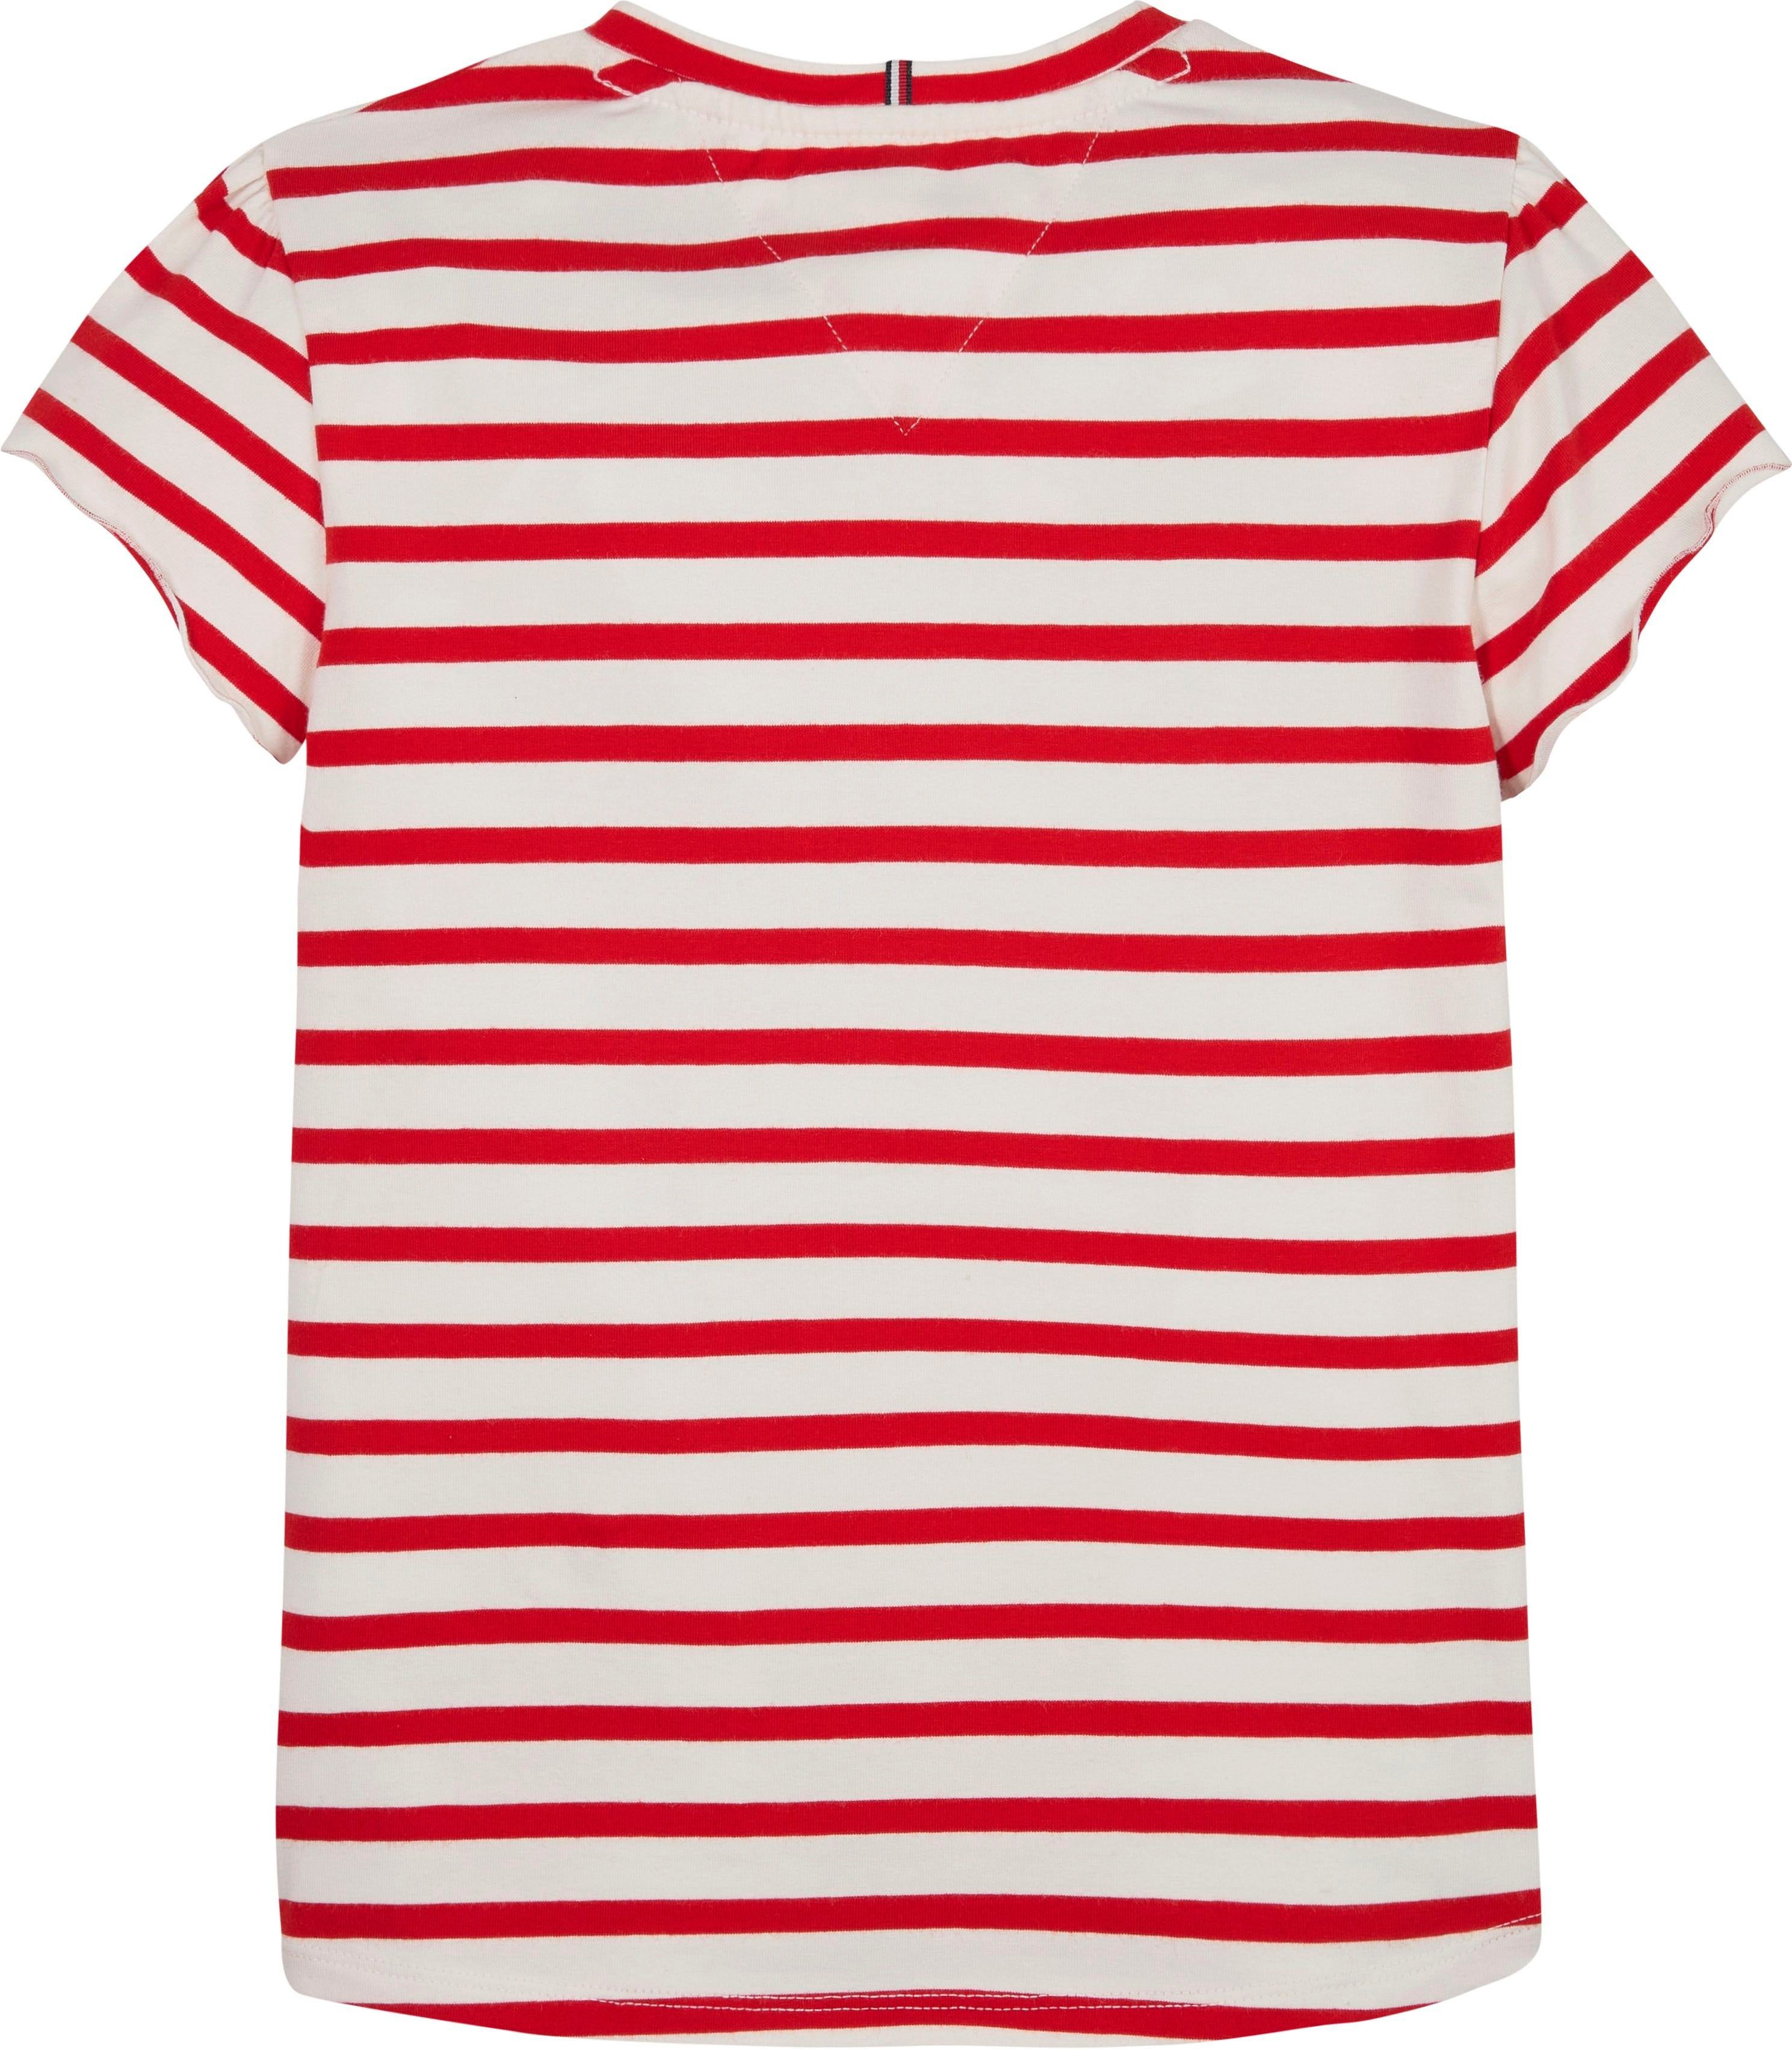 Optik in RUFFLE SLEEVE Tommy T-Shirt S/S Deep-Crimson-Stripe TOP Hilfiger gestreifter STRIPED